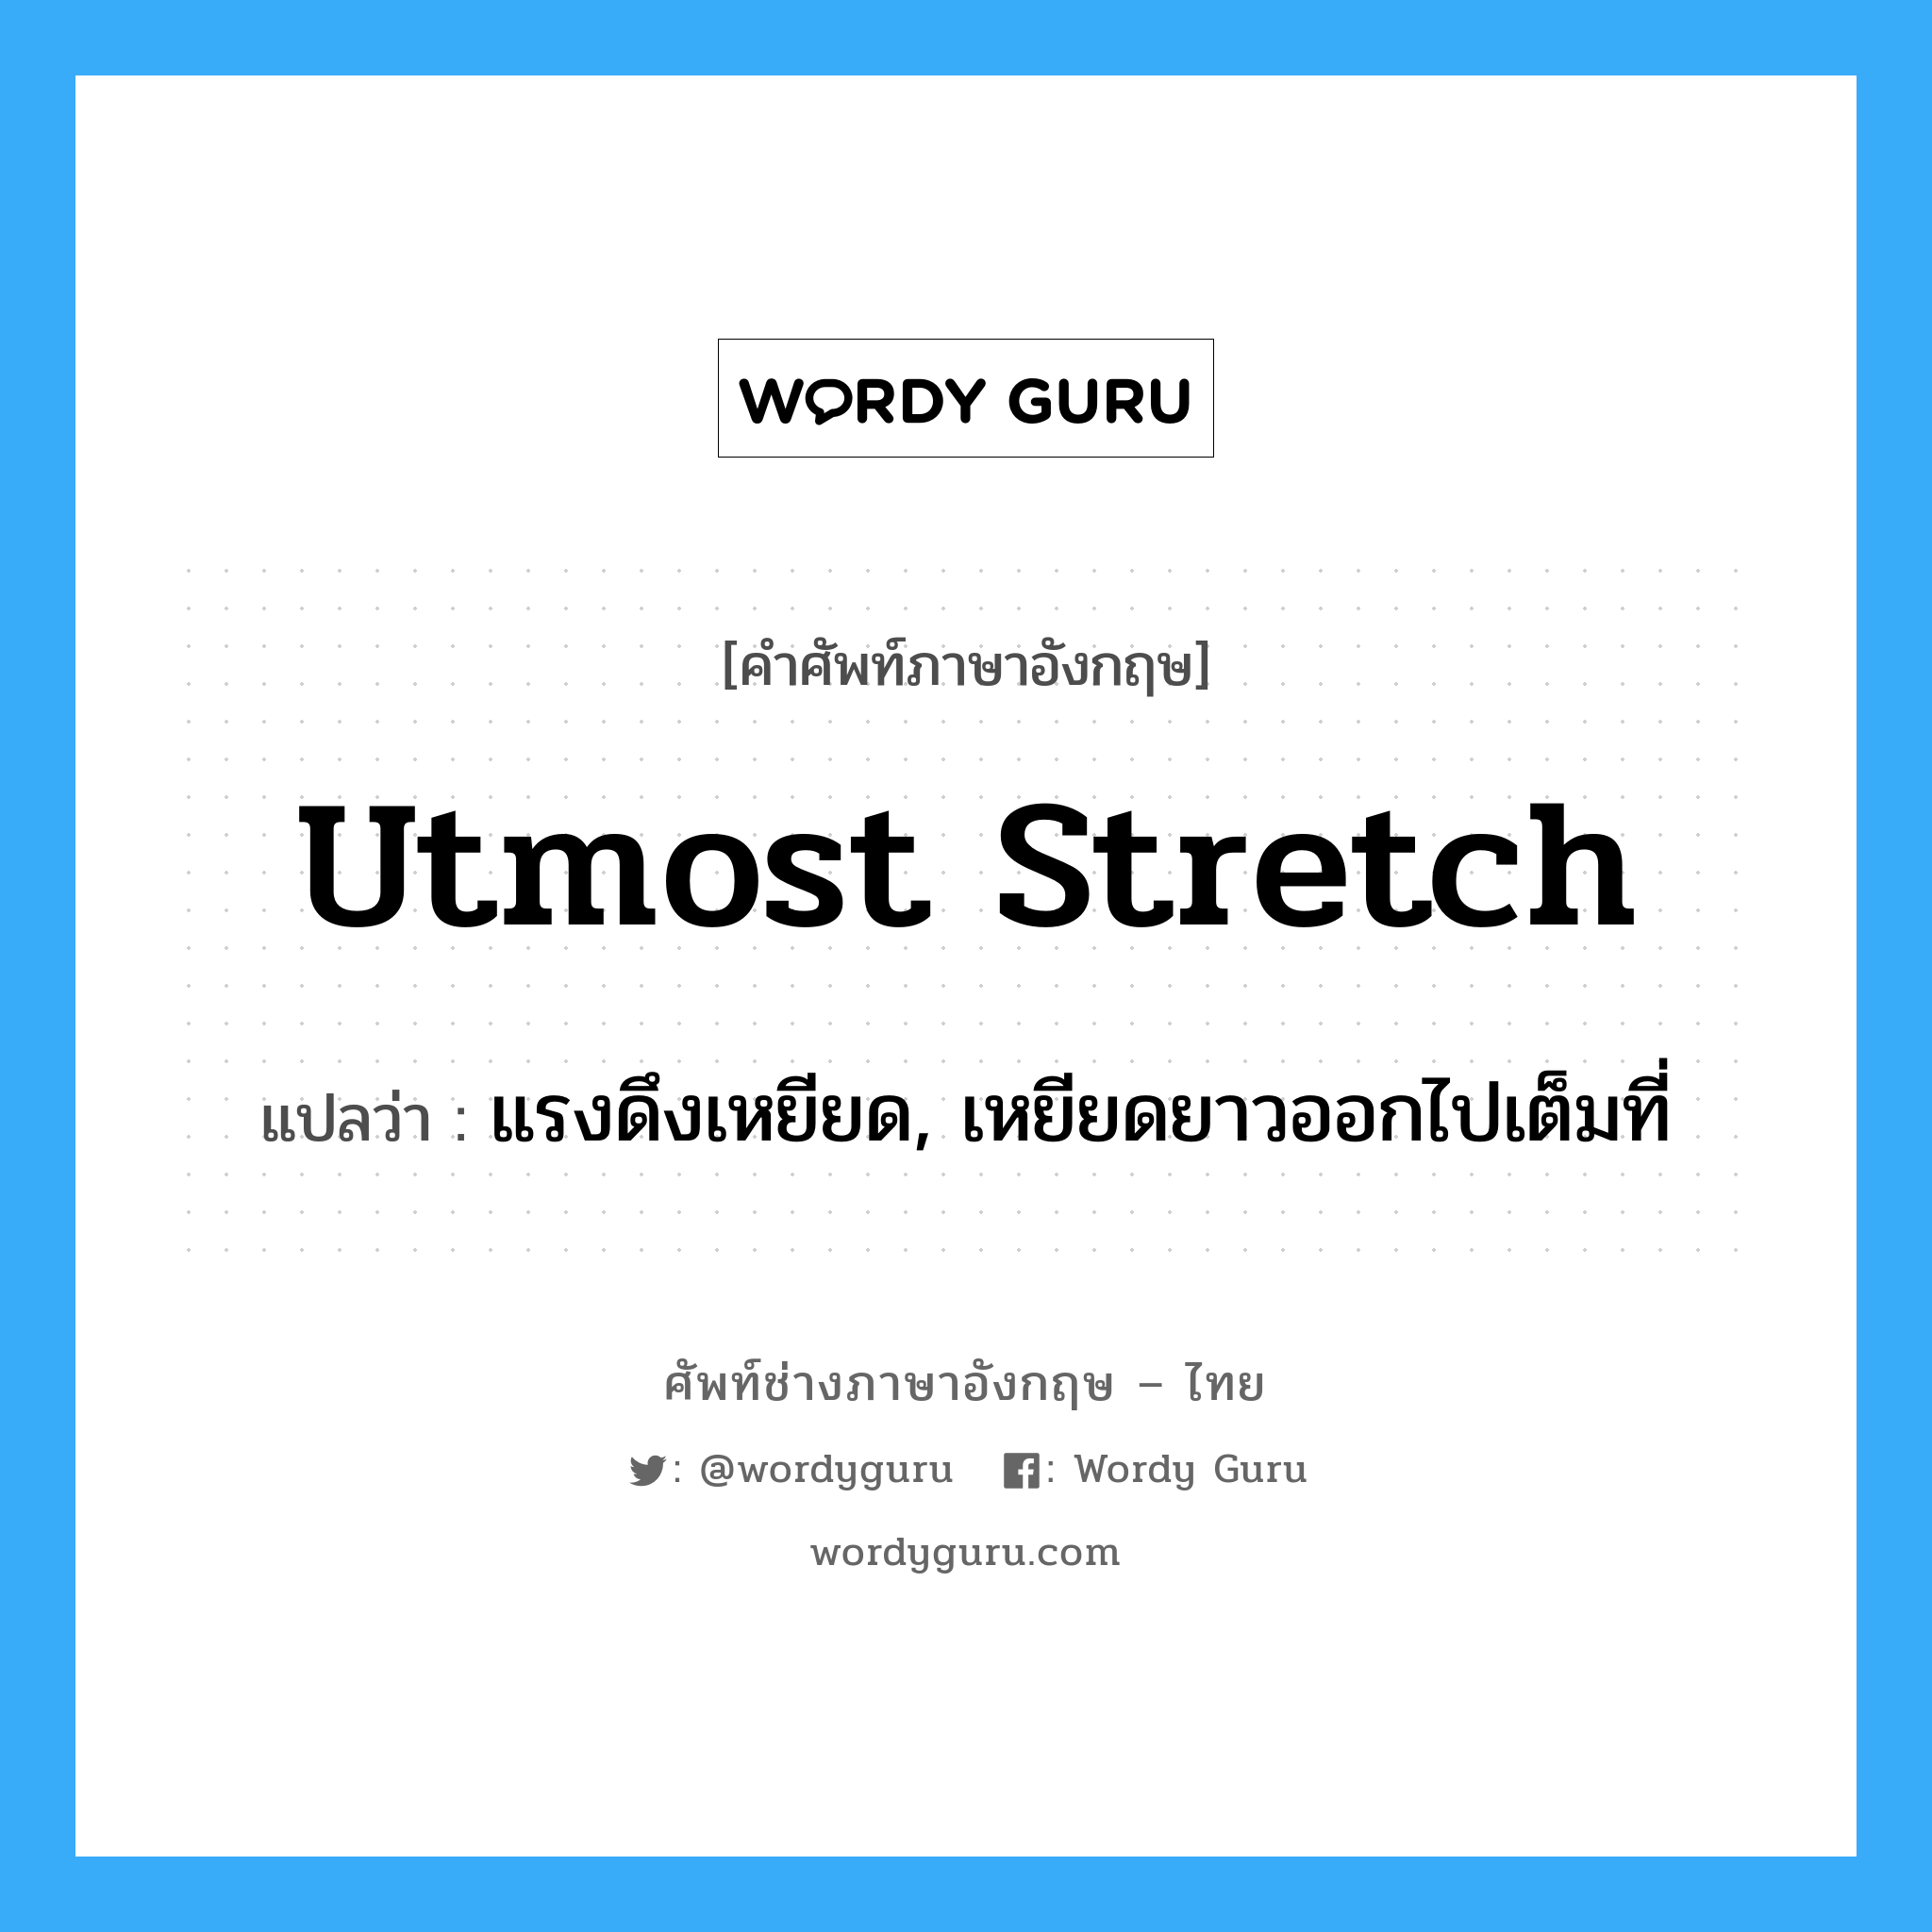 utmost stretch แปลว่า?, คำศัพท์ช่างภาษาอังกฤษ - ไทย utmost stretch คำศัพท์ภาษาอังกฤษ utmost stretch แปลว่า แรงดึงเหยียด, เหยียดยาวออกไปเต็มที่